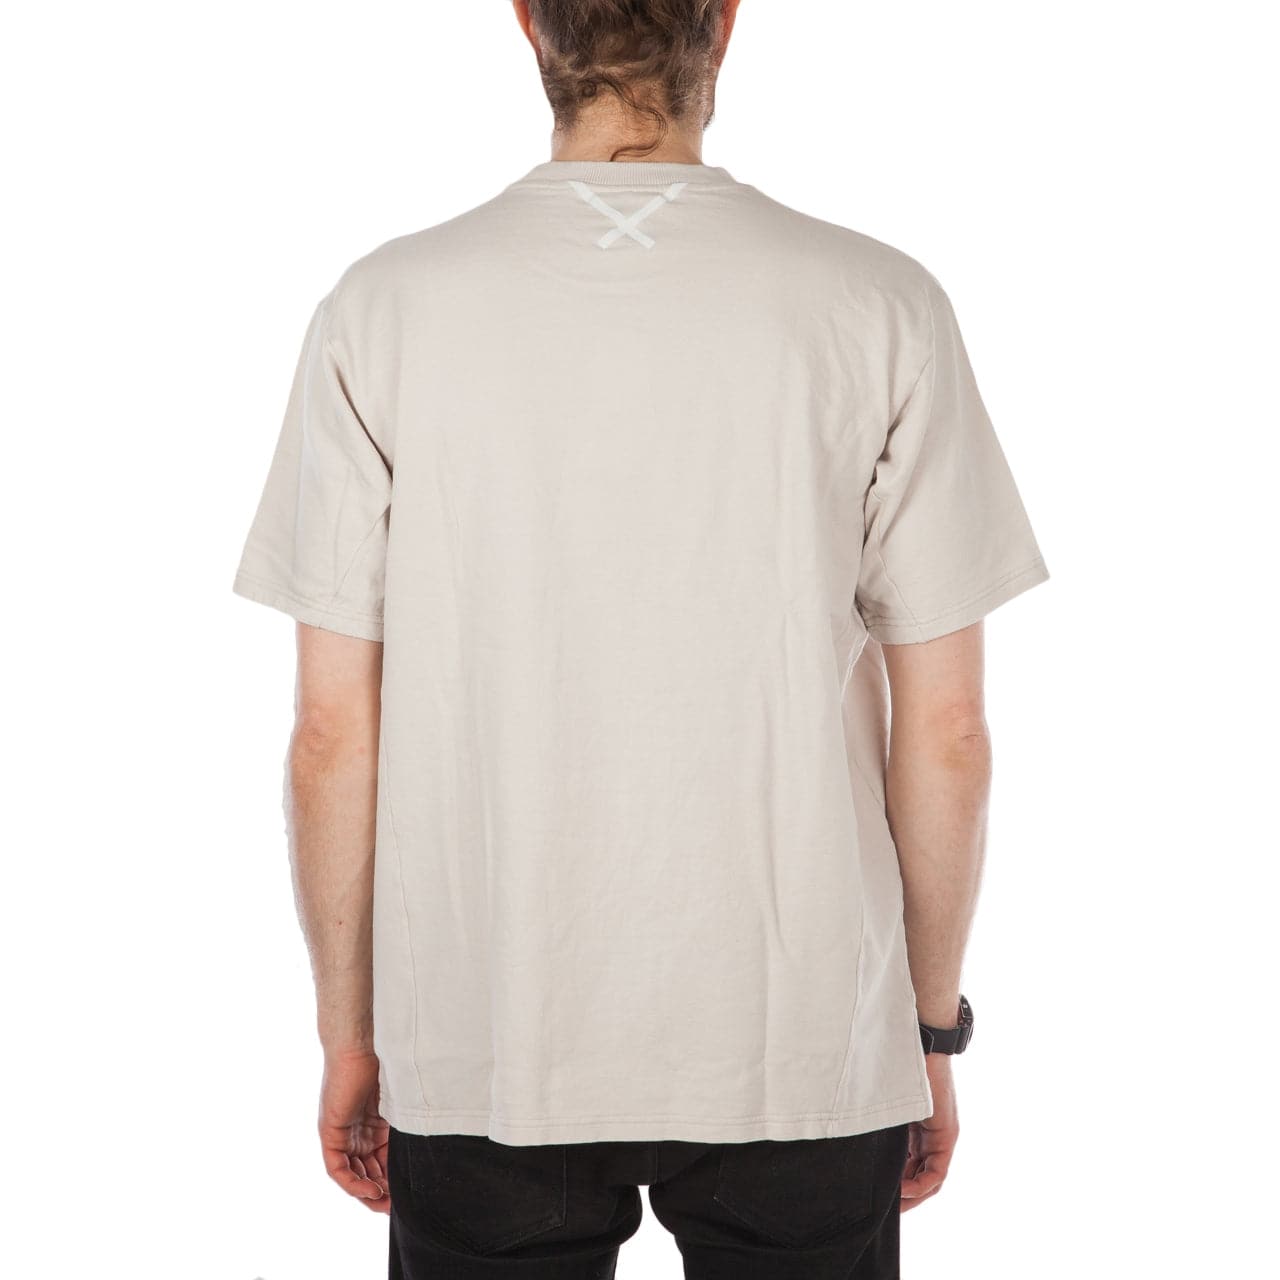 adidas Originals XBYO x Oyster T-Shirt (Perle)  - Allike Store